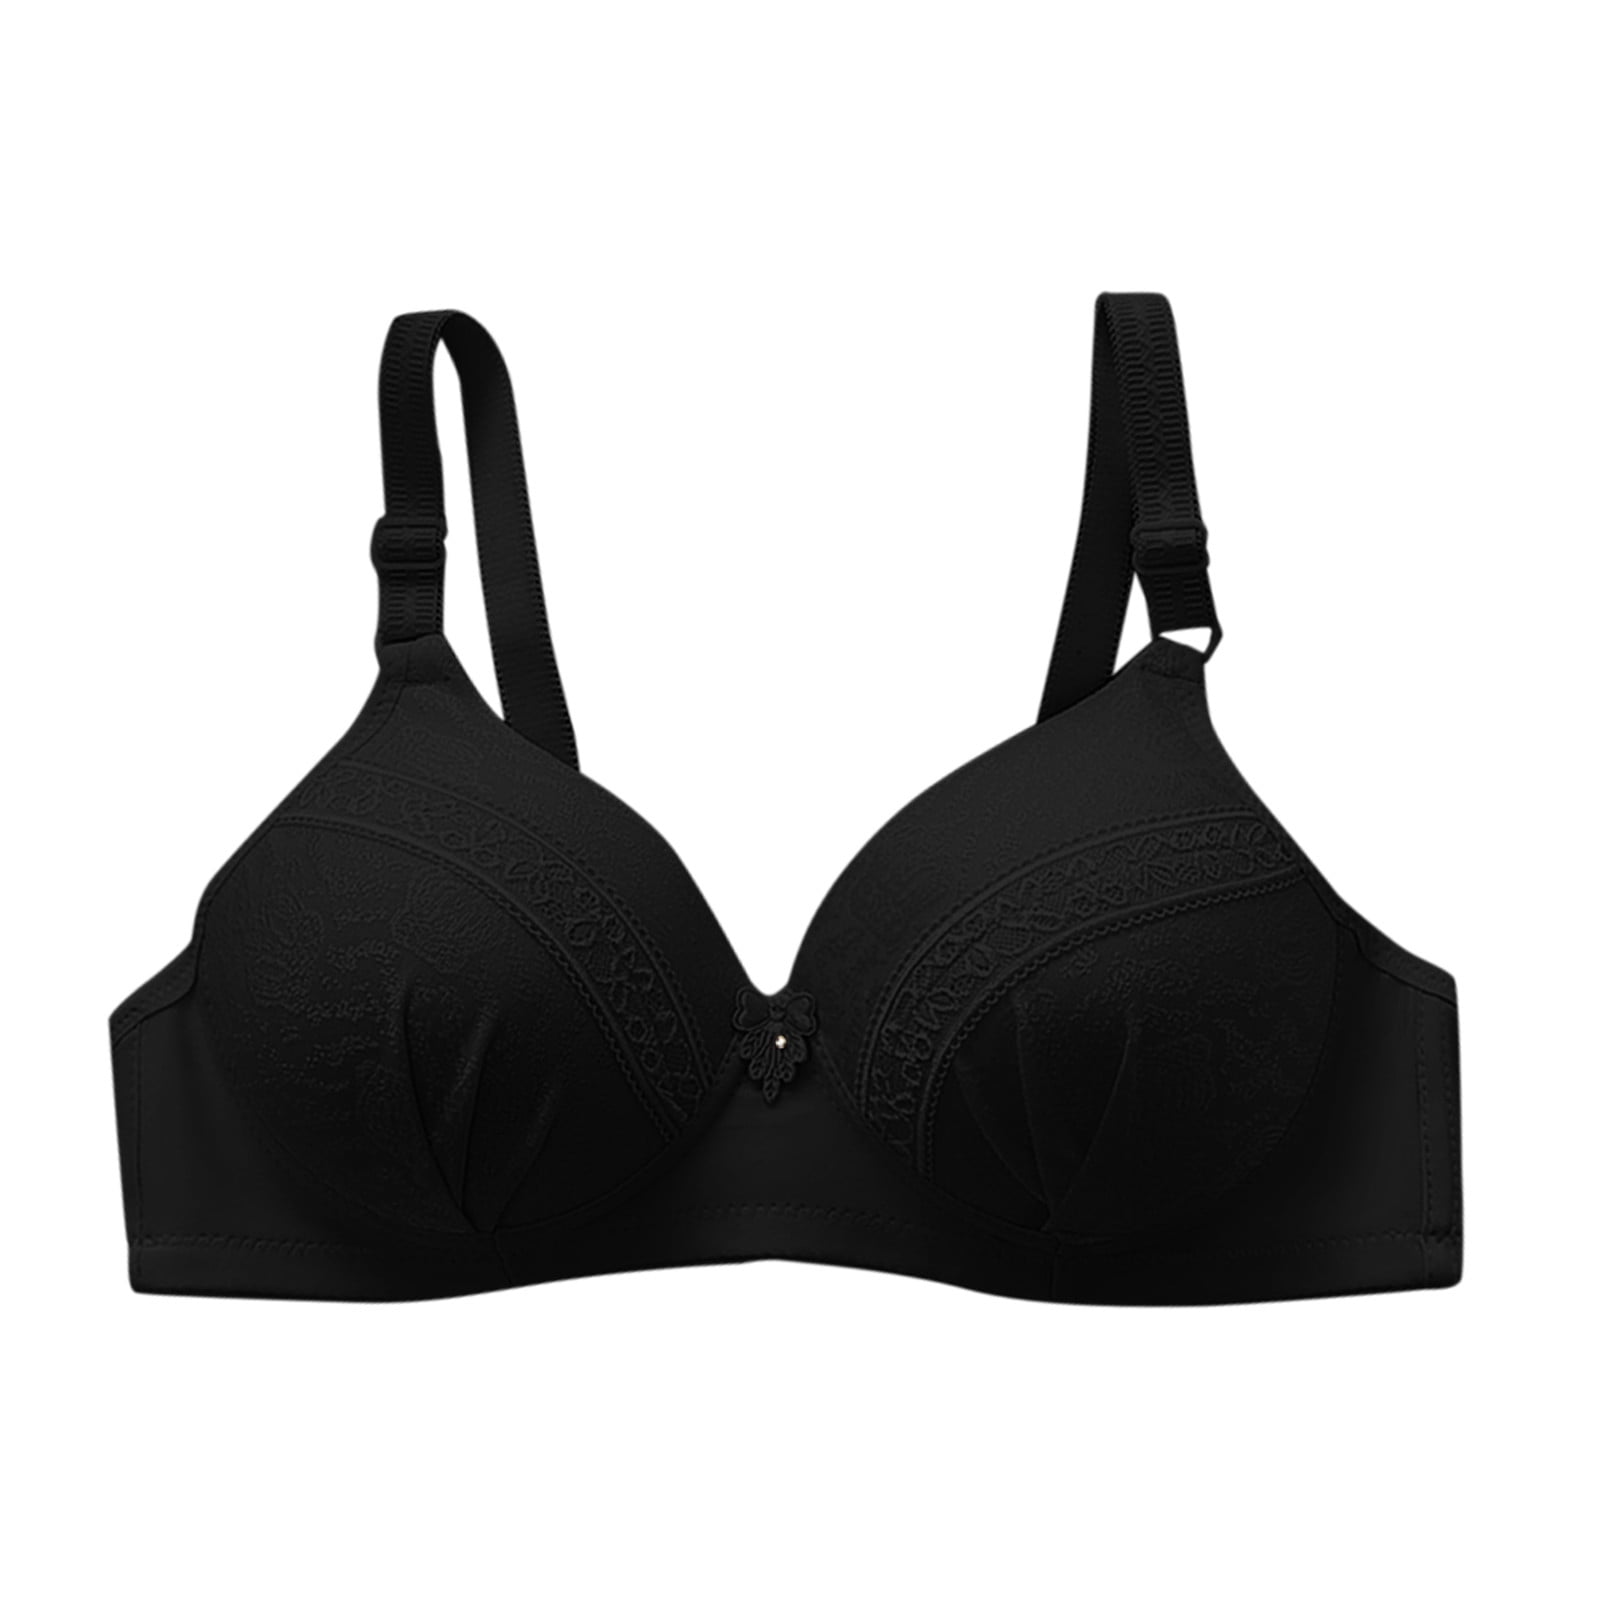 CAICJ98 Sports Bras For Women With String Quick Dry Underwear Bras